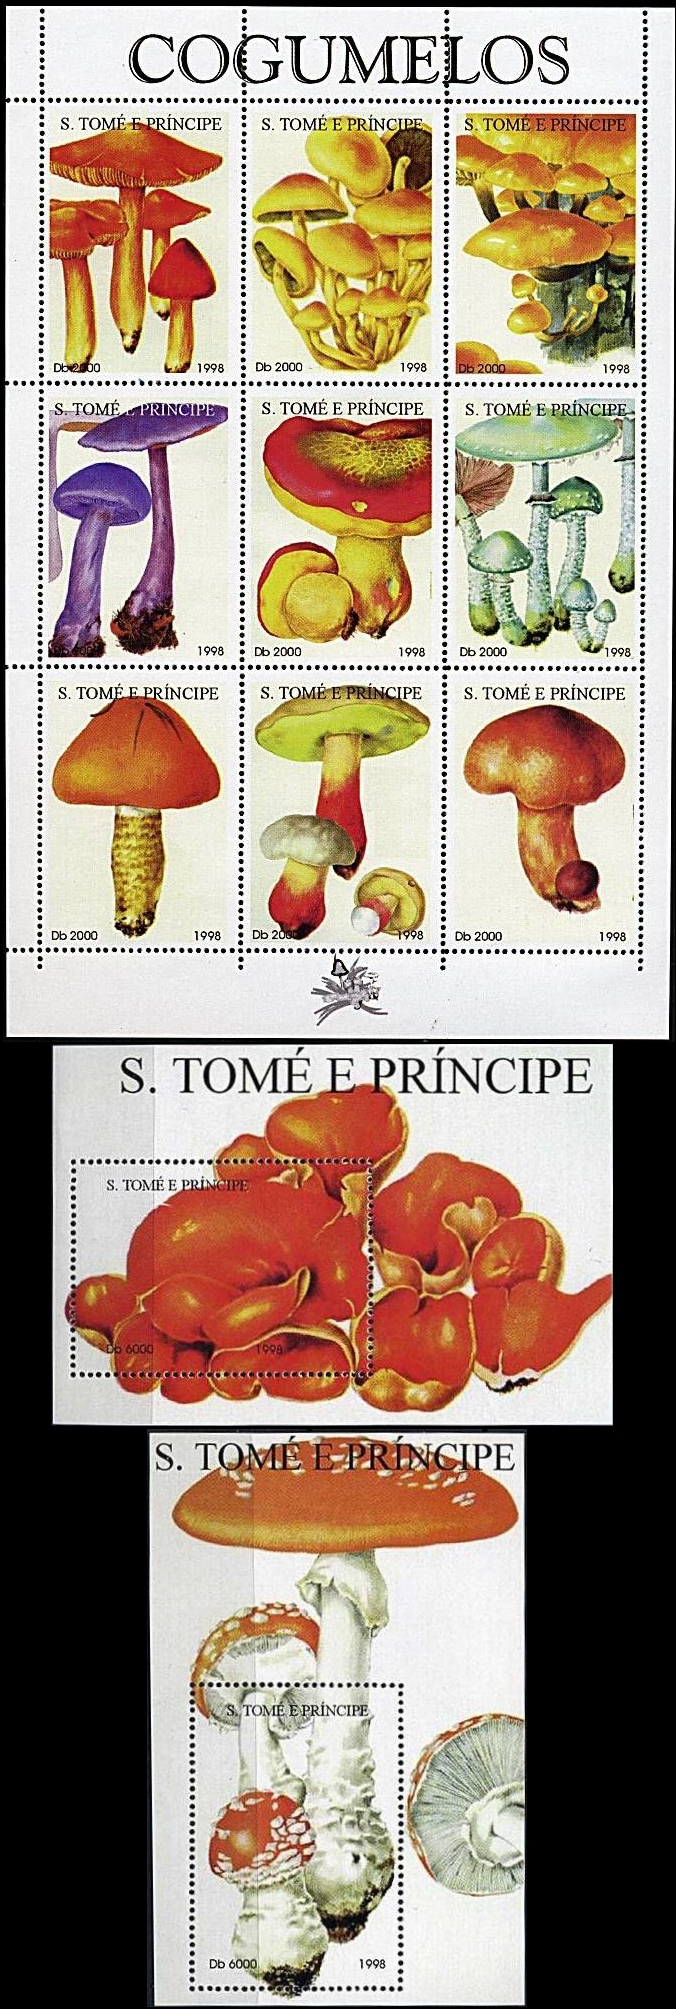 Saint Thomas and Prince Islands 1998 Mushrooms Souvenir Sheets of 9 and 1